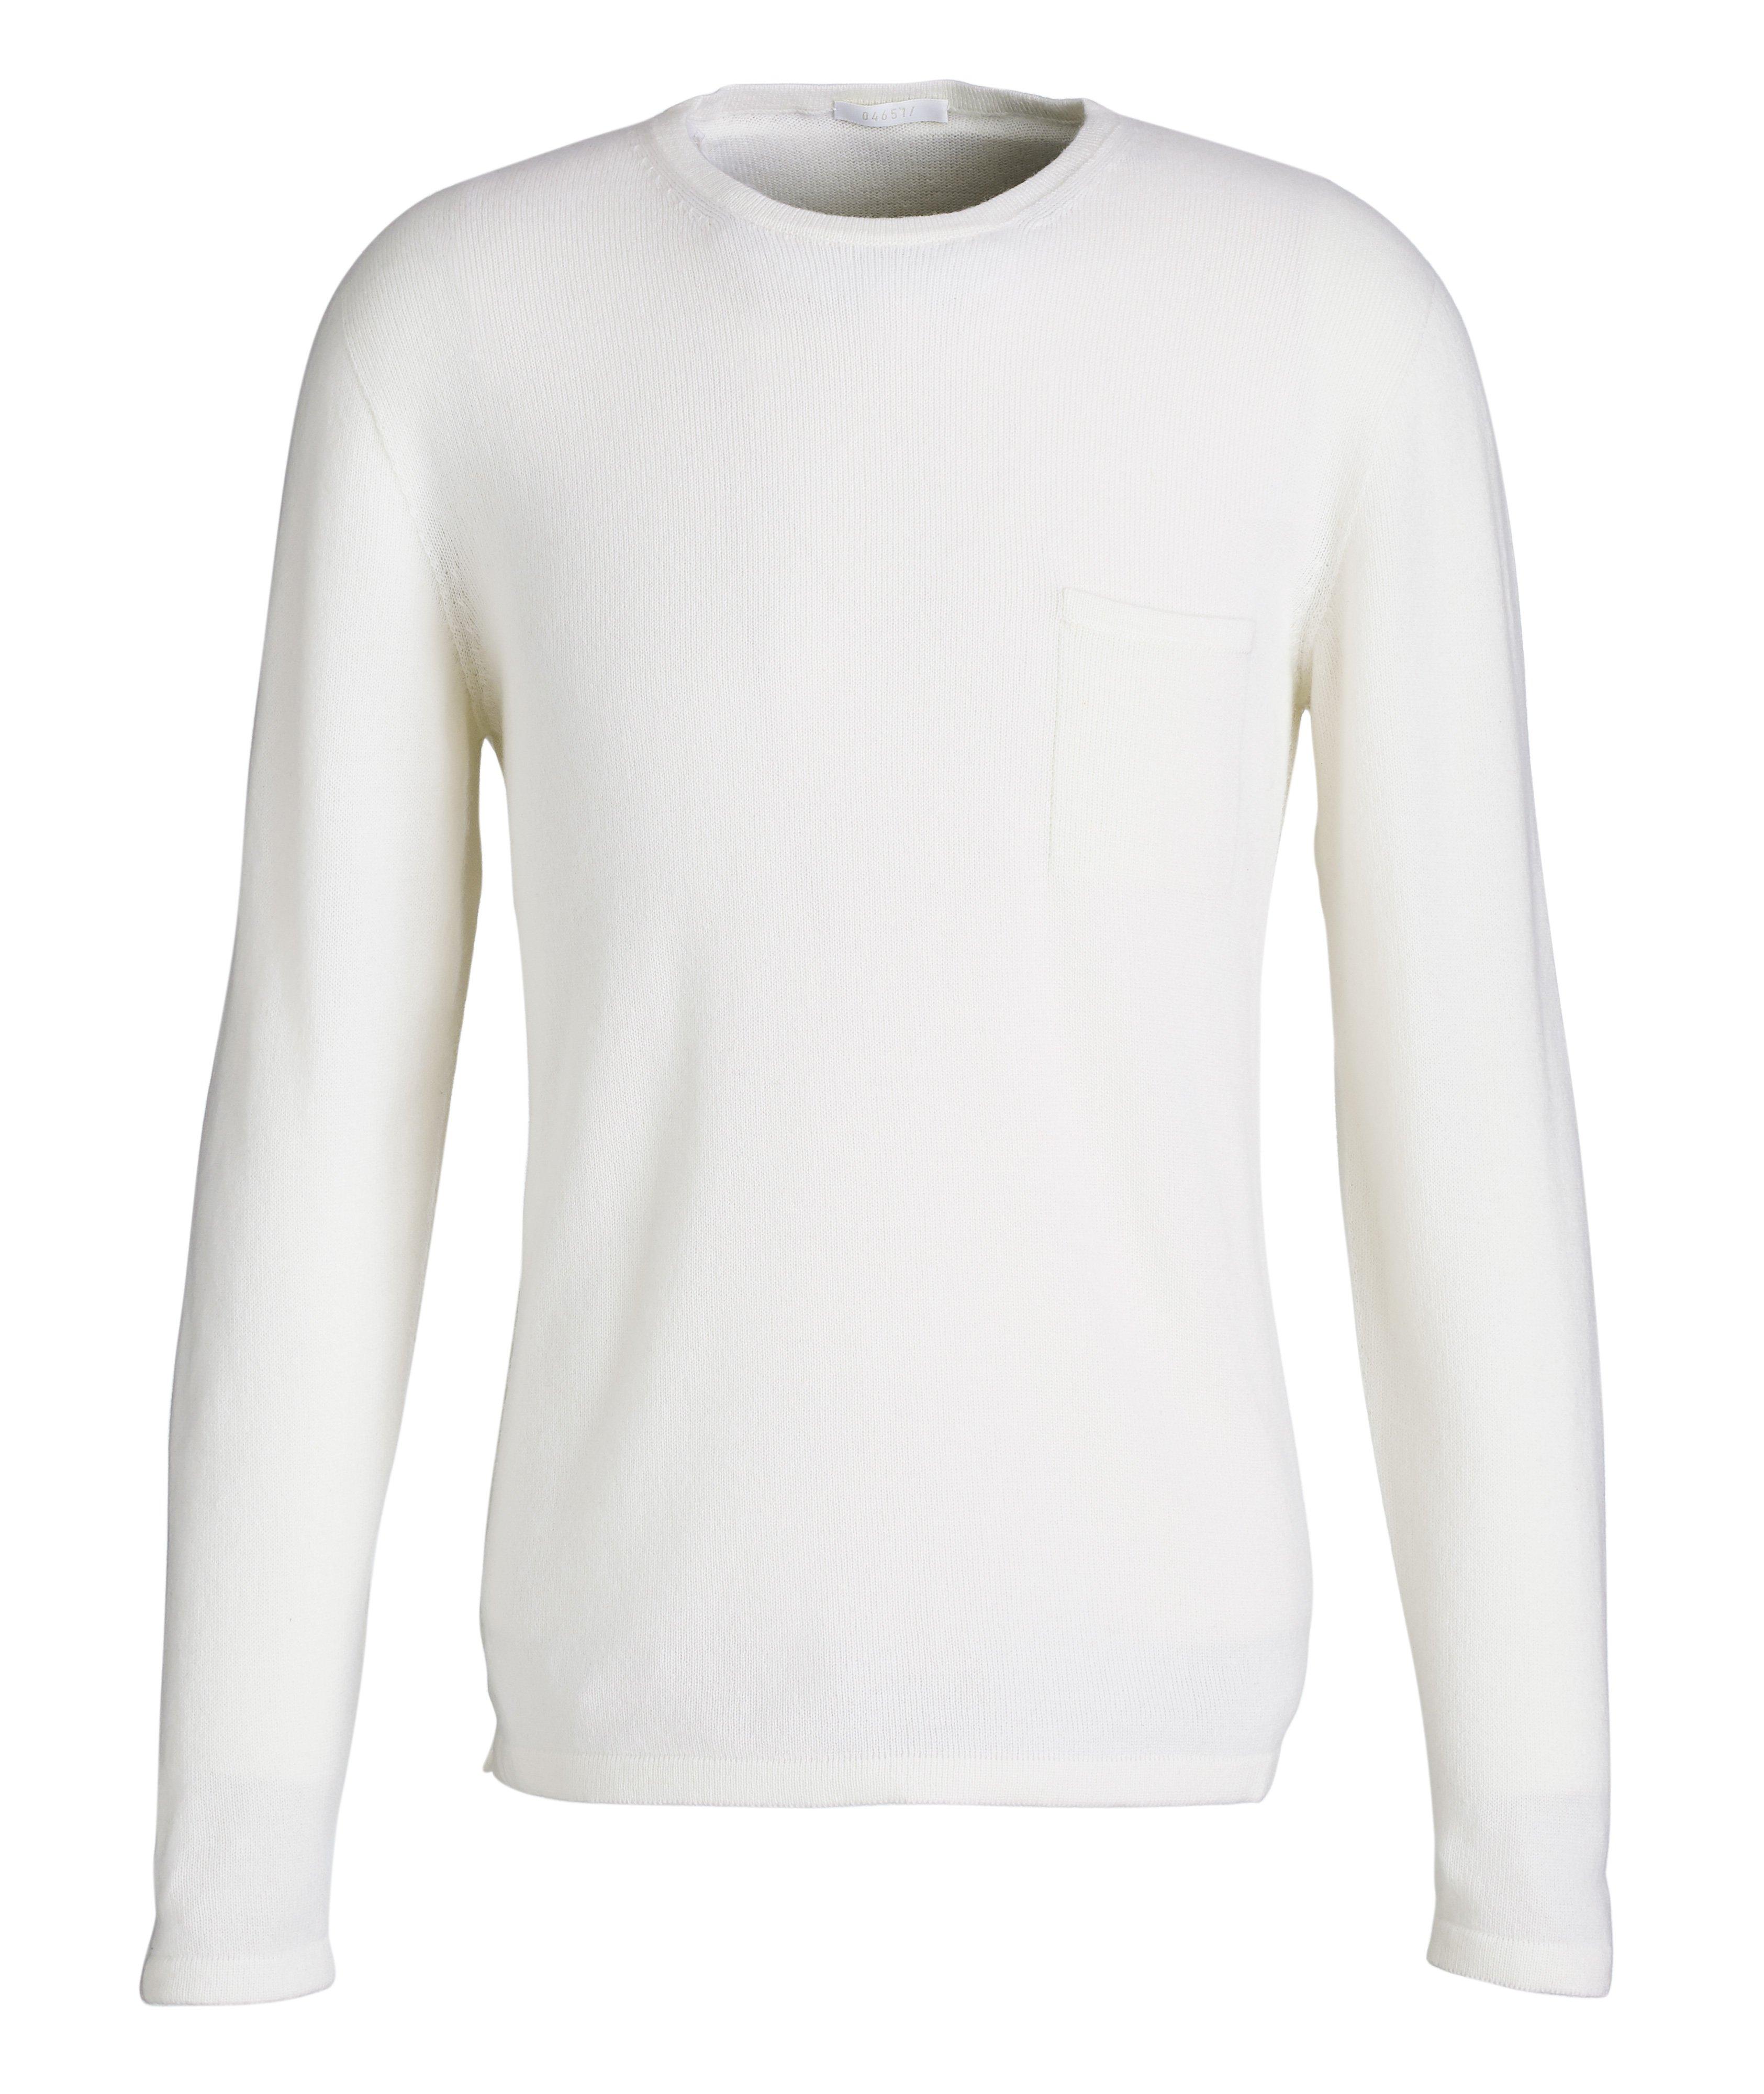 Long-Sleeve Cashmere T-Shirt image 0